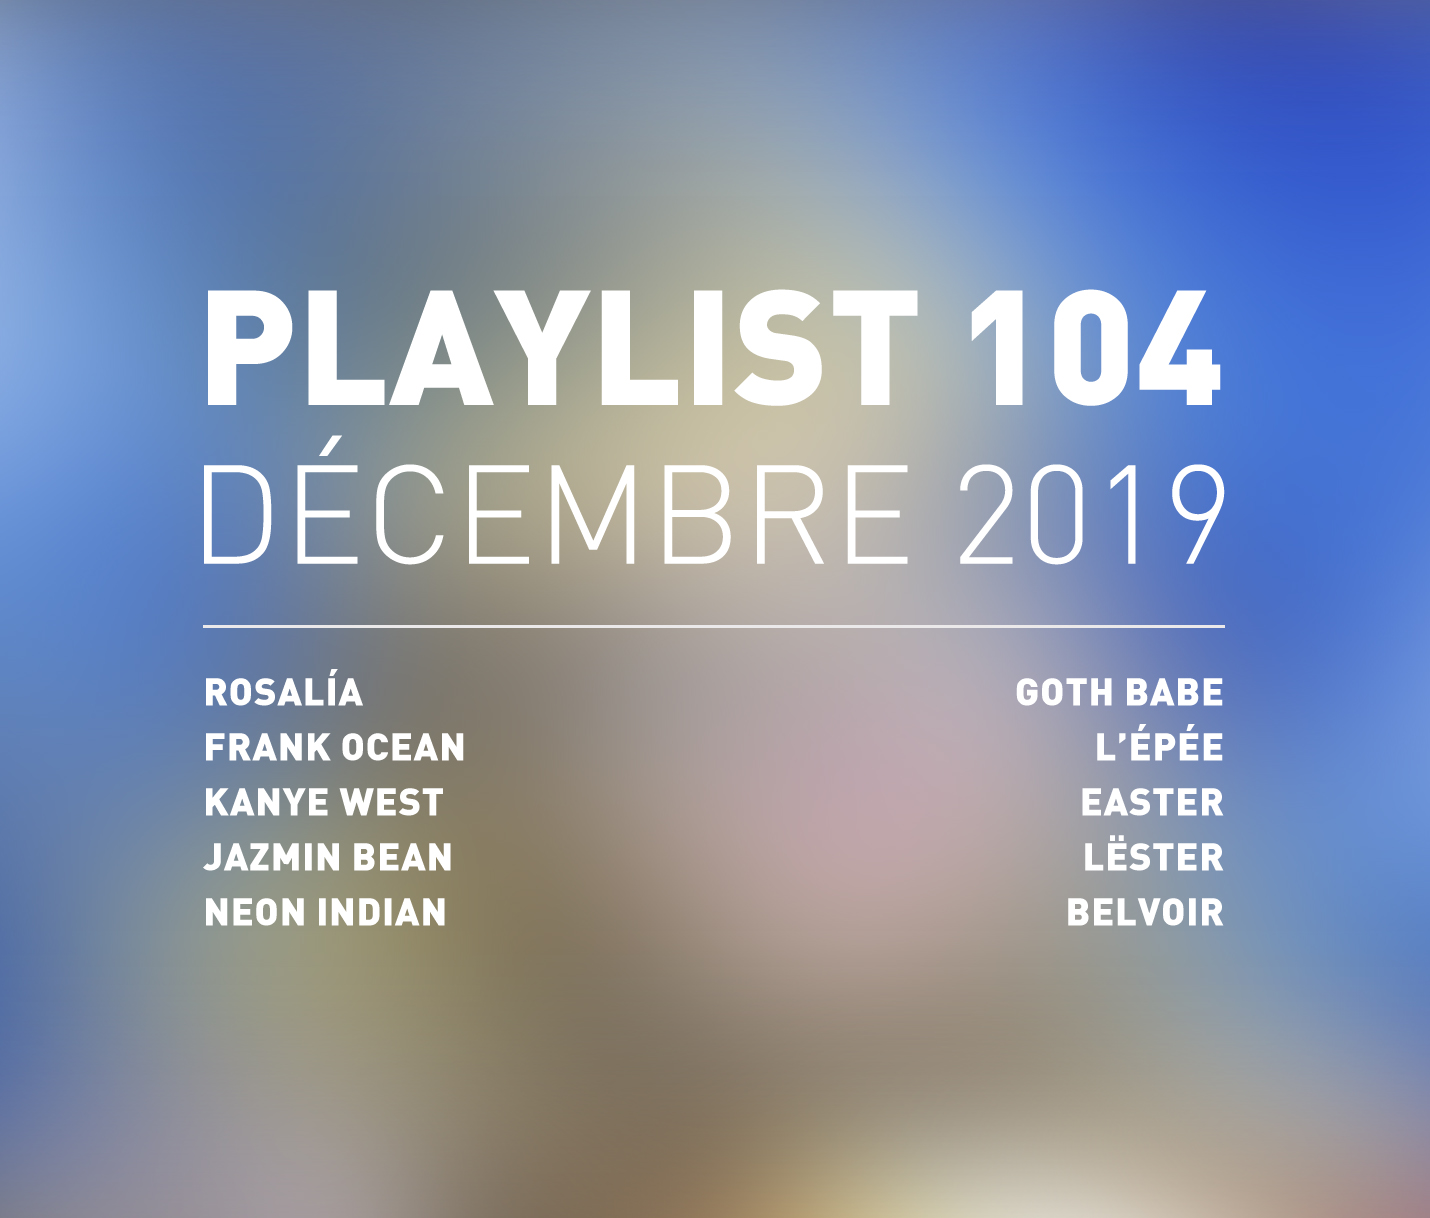 Playlist 104 : Frank Ocean, Neon Indian, Easter, Lëster, etc.